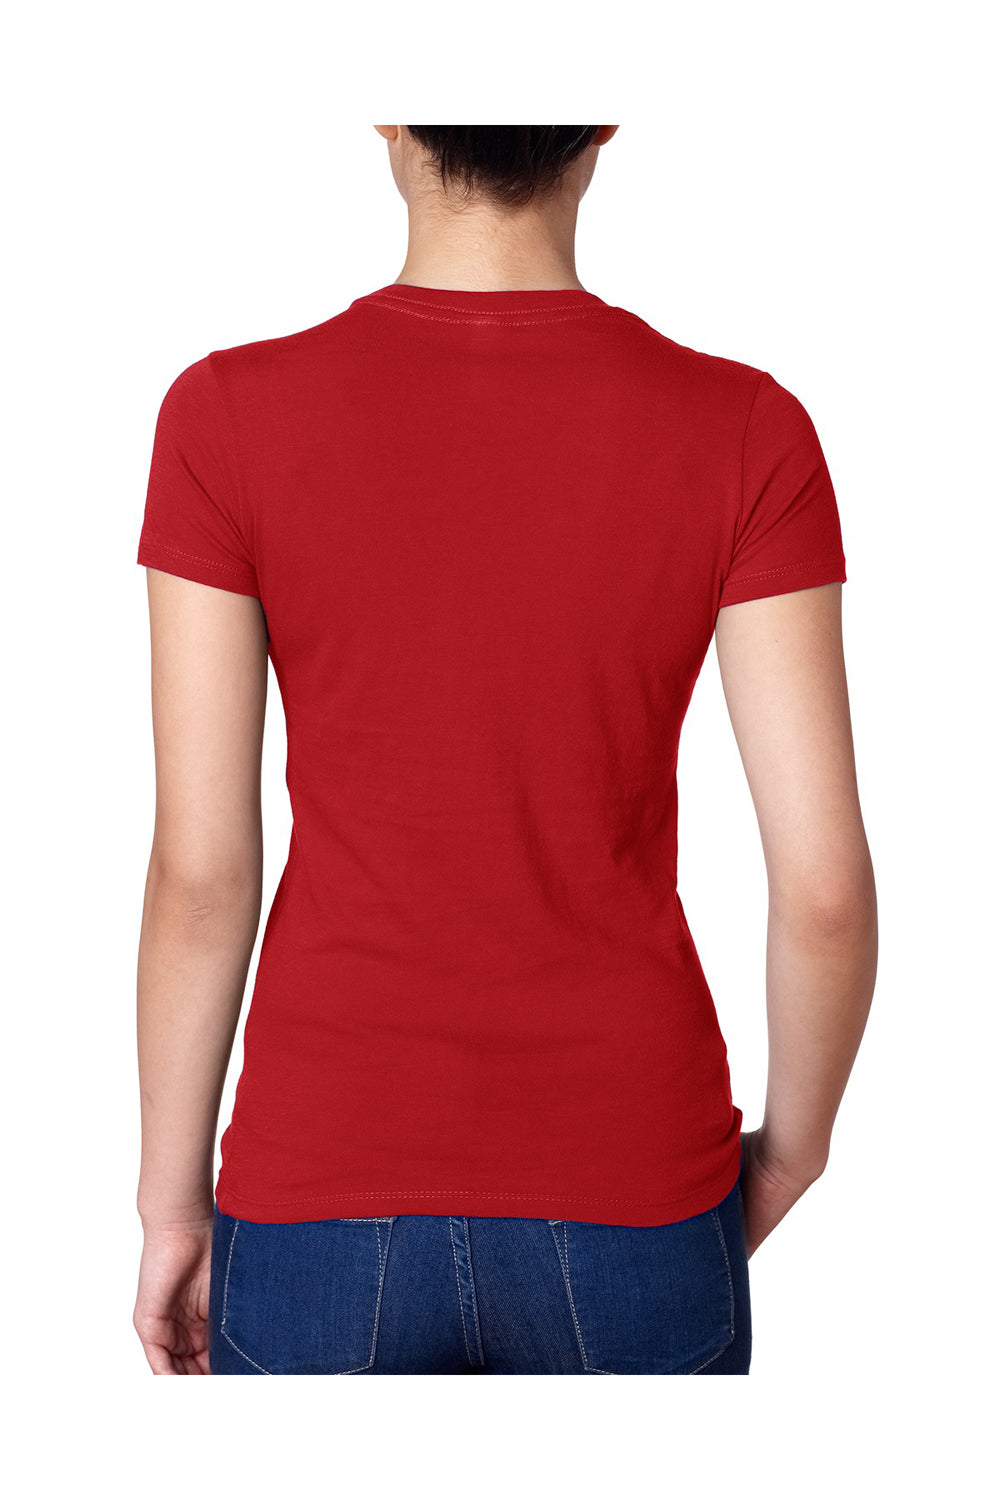 Next Level N3900 Womens Boyfriend Fine Jersey Short Sleeve Crewneck T-Shirt Scarlet Red Back